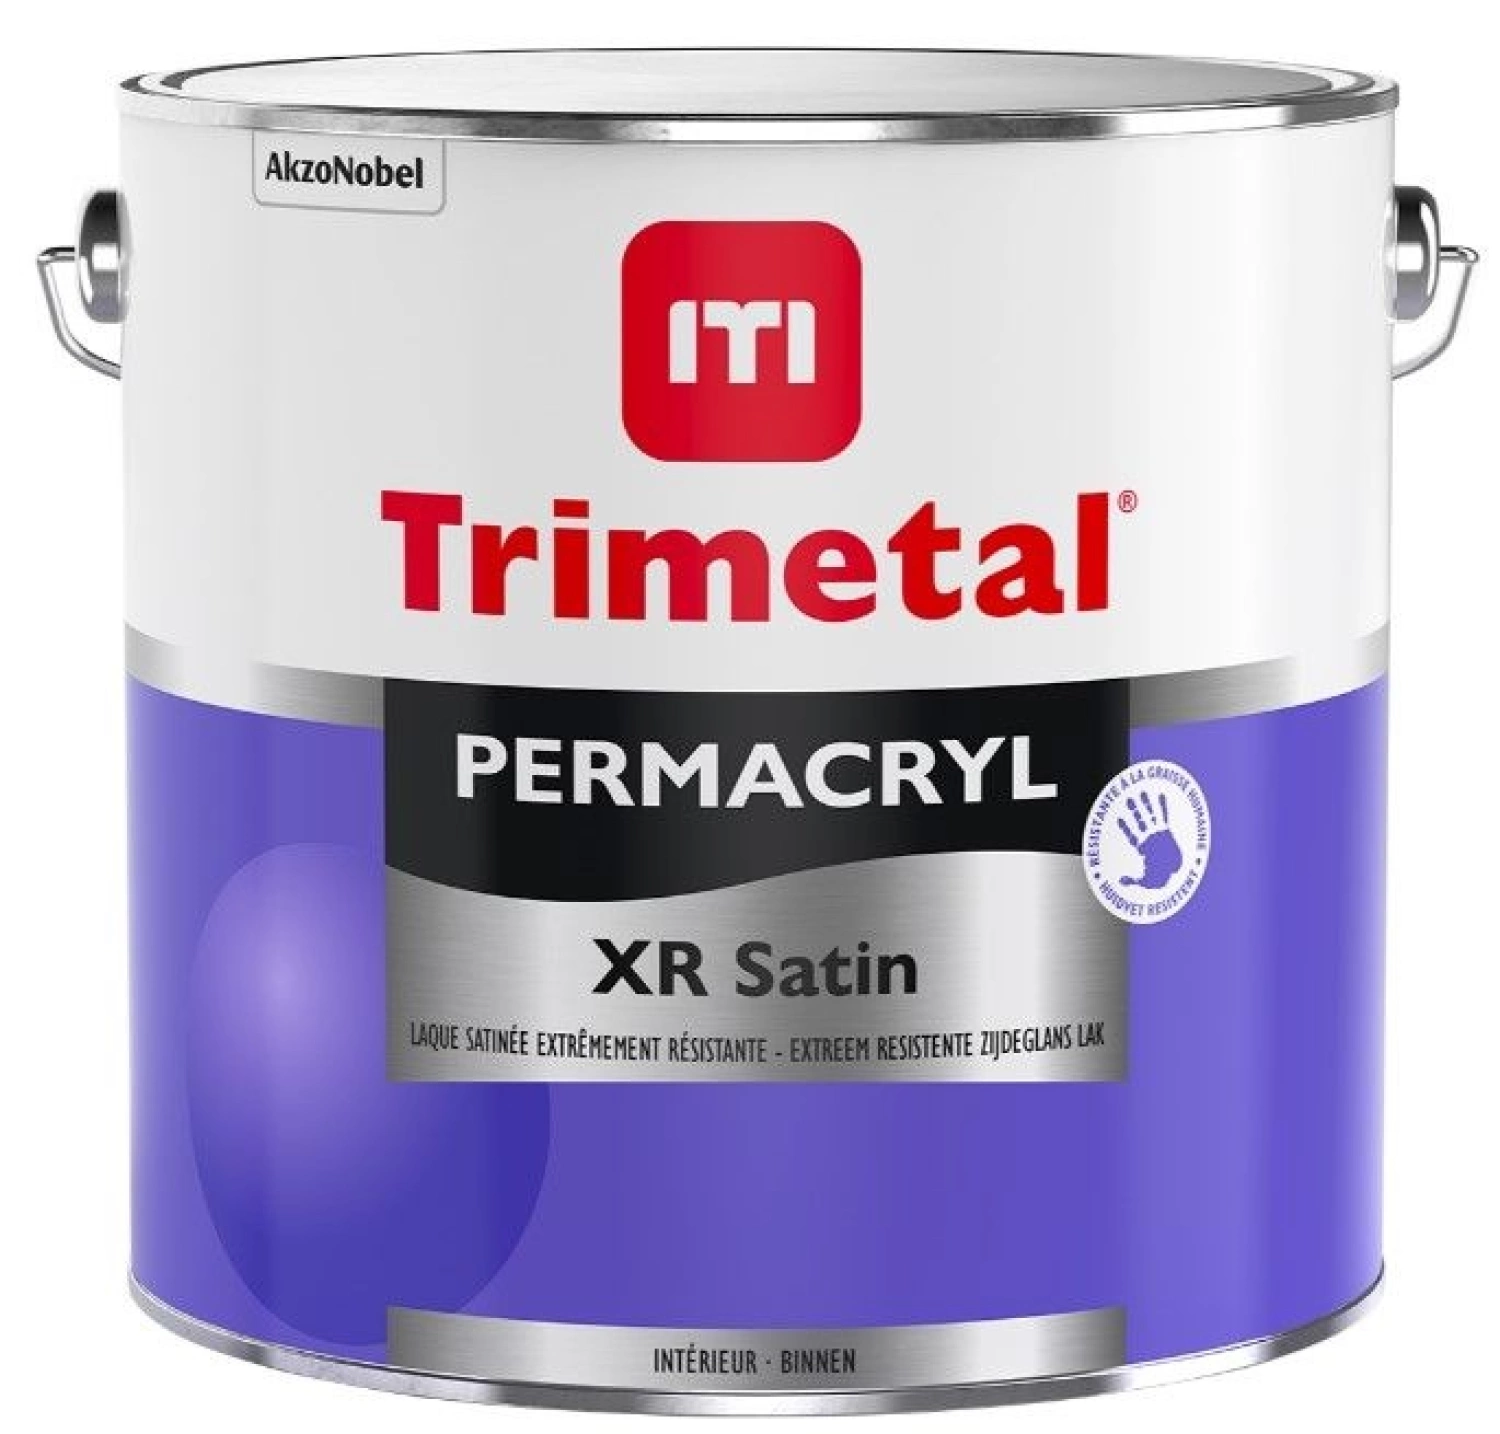 Trimetal Permacryl XR Satin lak - op kleur gemengd - 500ML-image